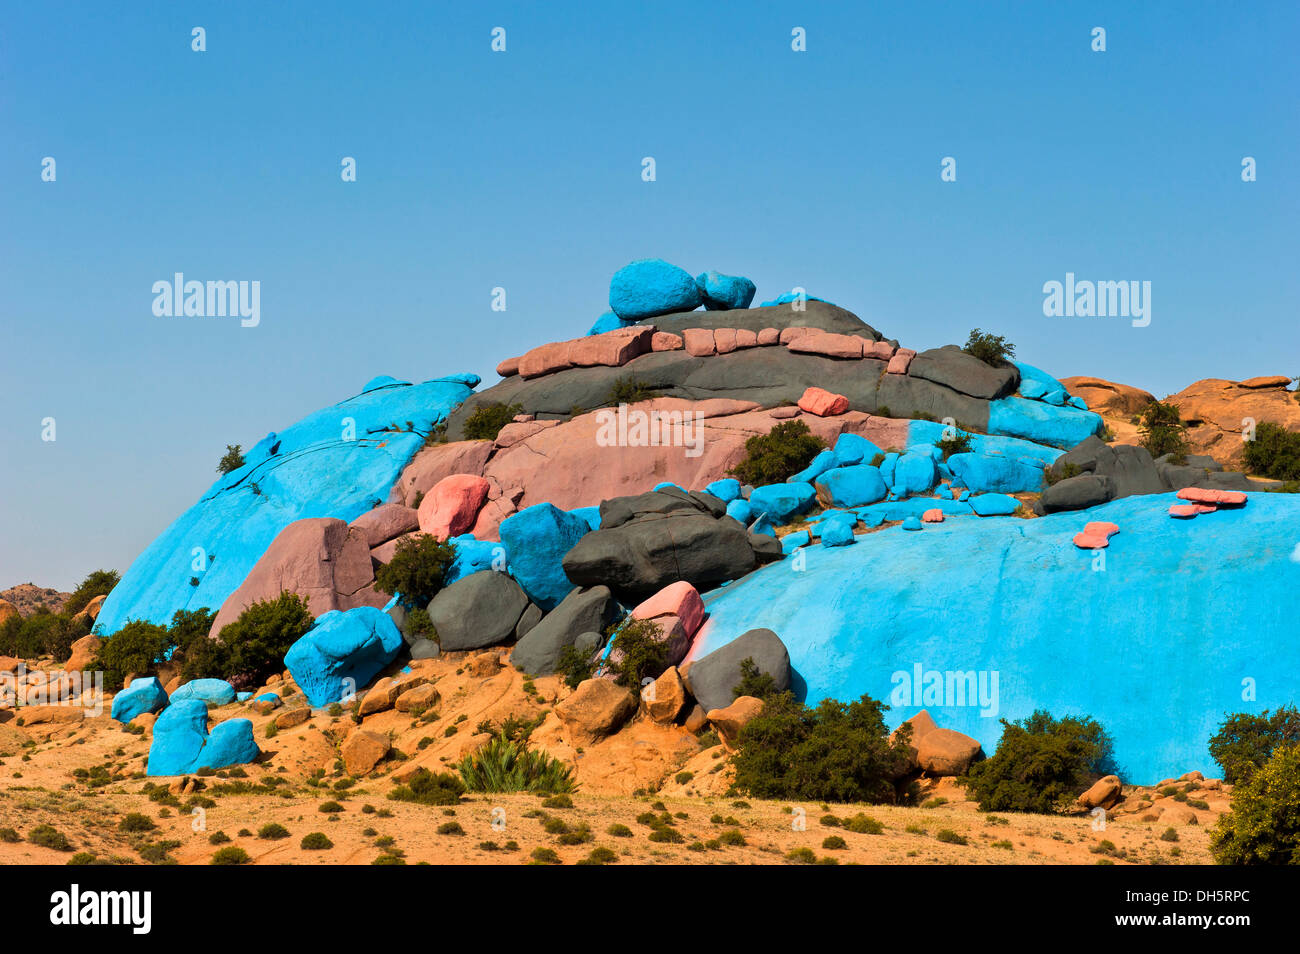 Pinturas de rocas fotografías e imágenes de alta resolución - Alamy